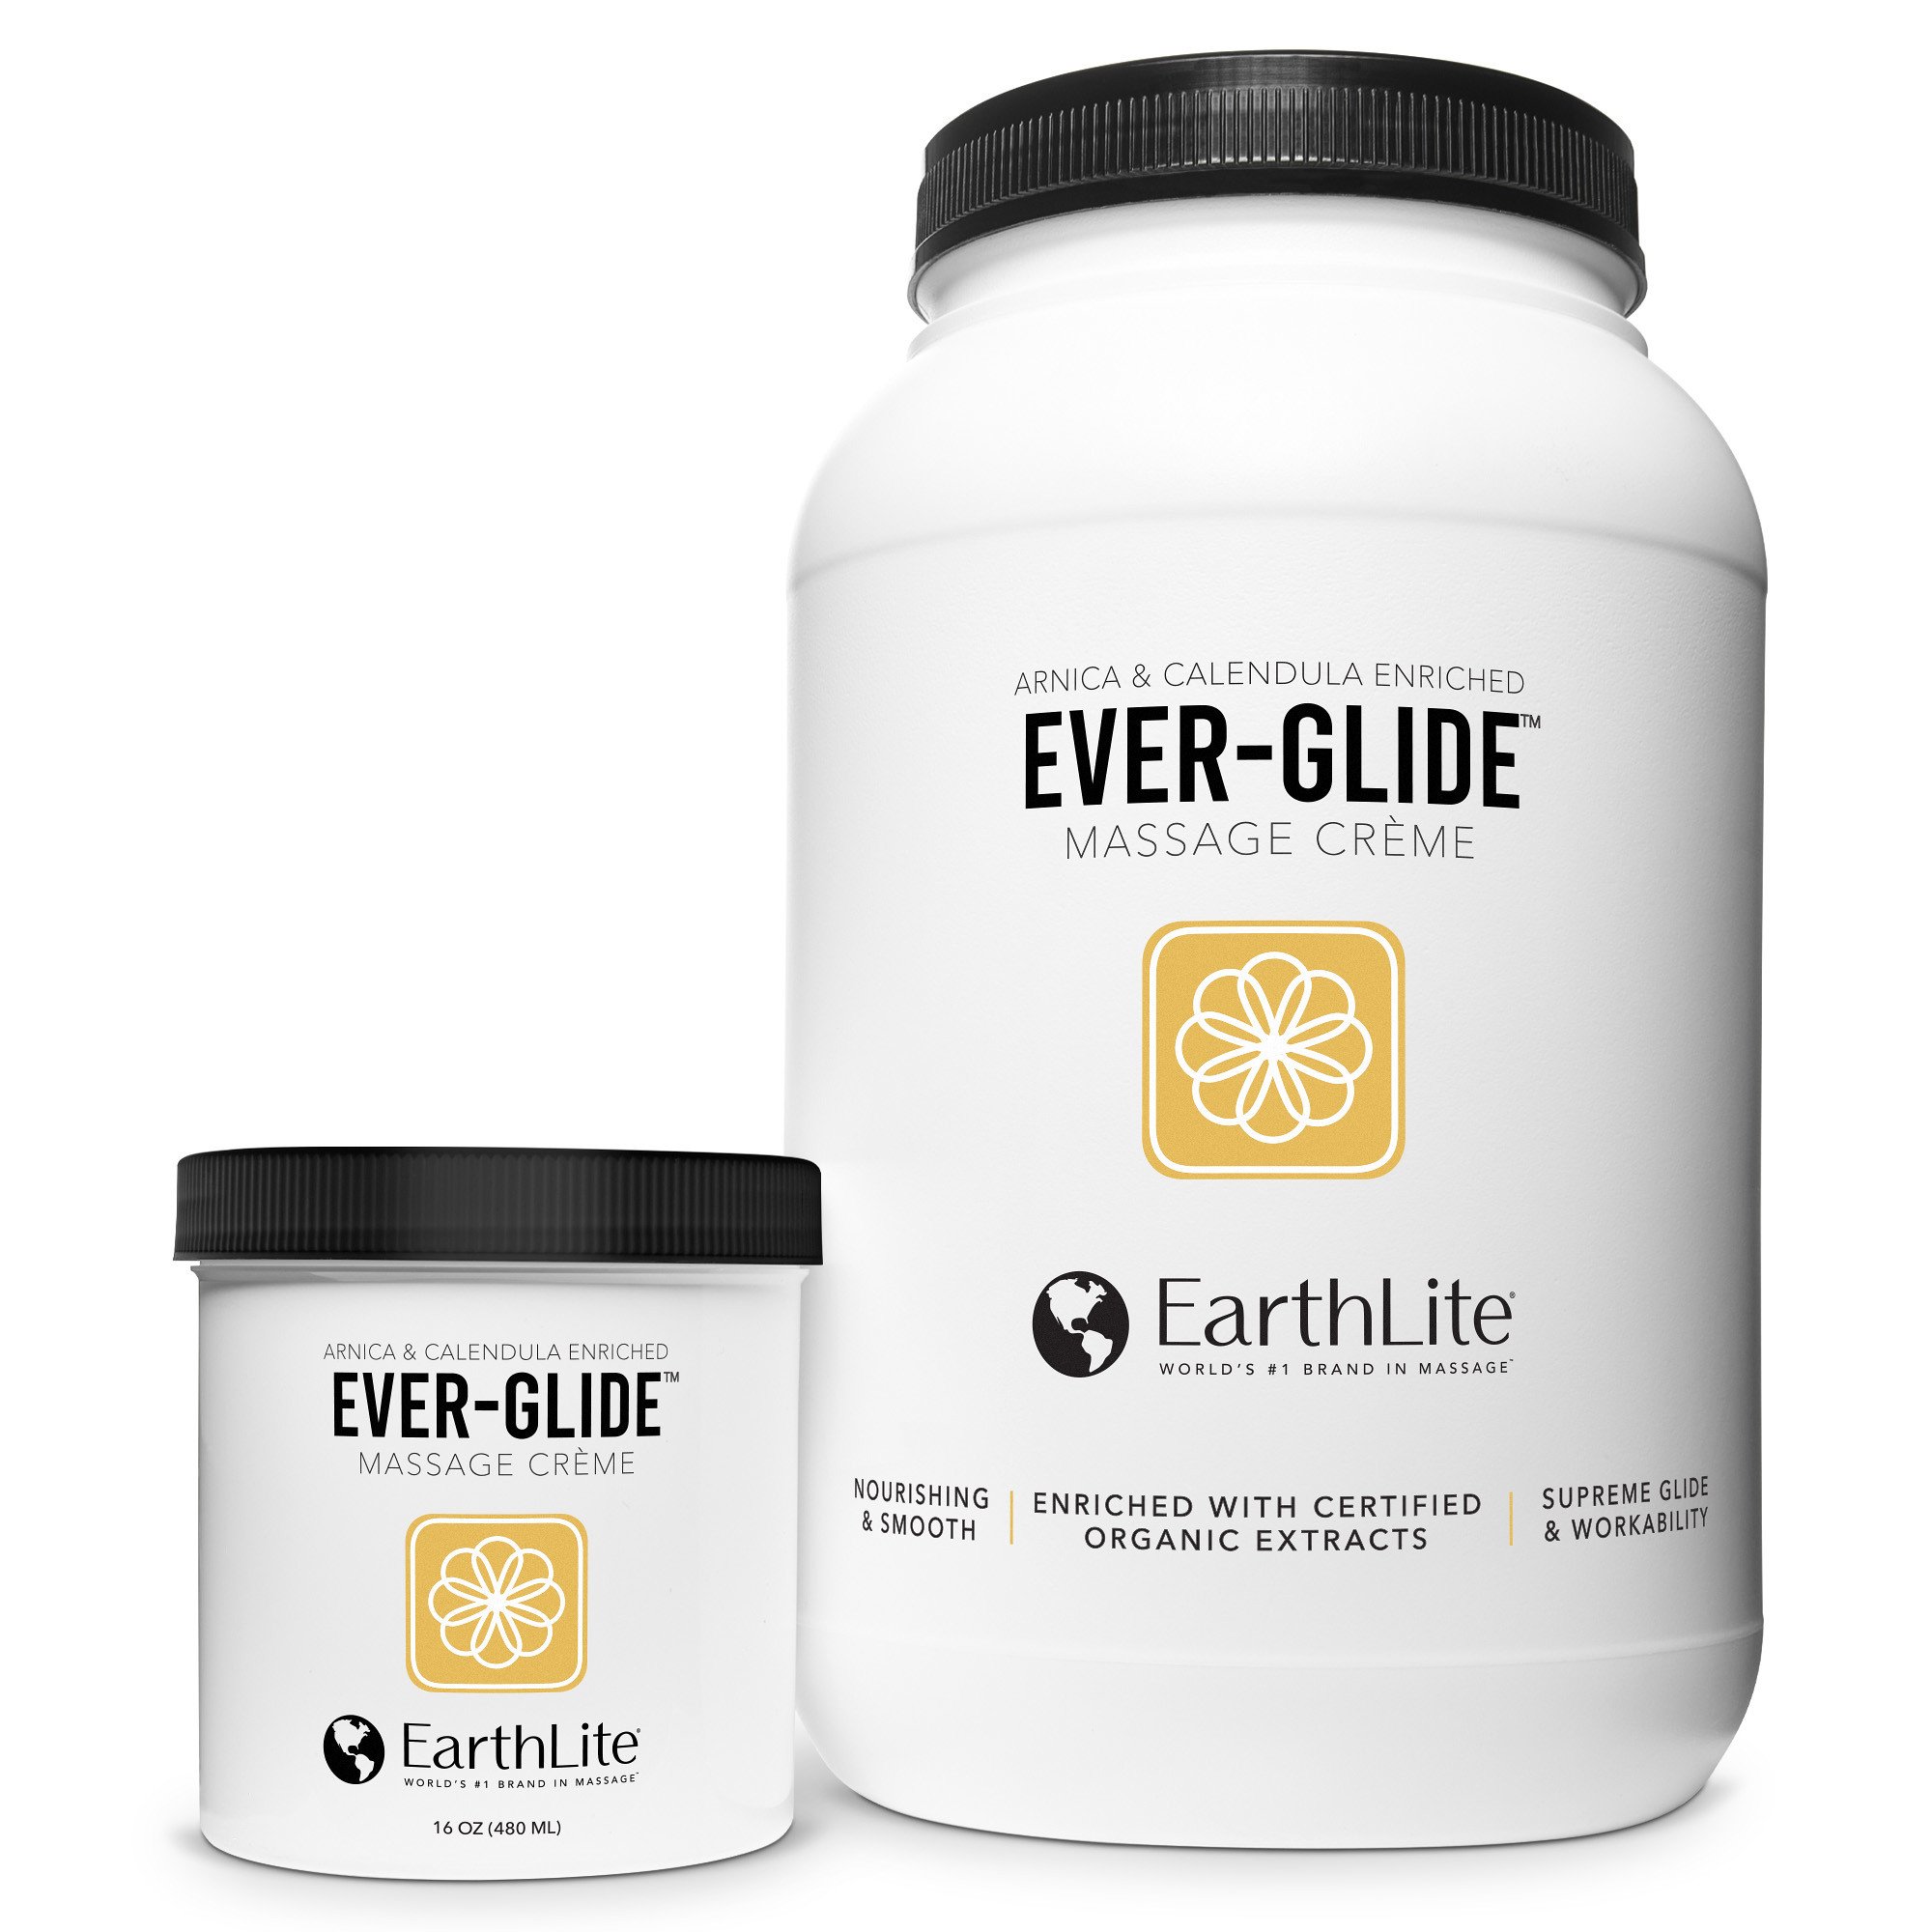 Earthlite Ever-Glide massage creme